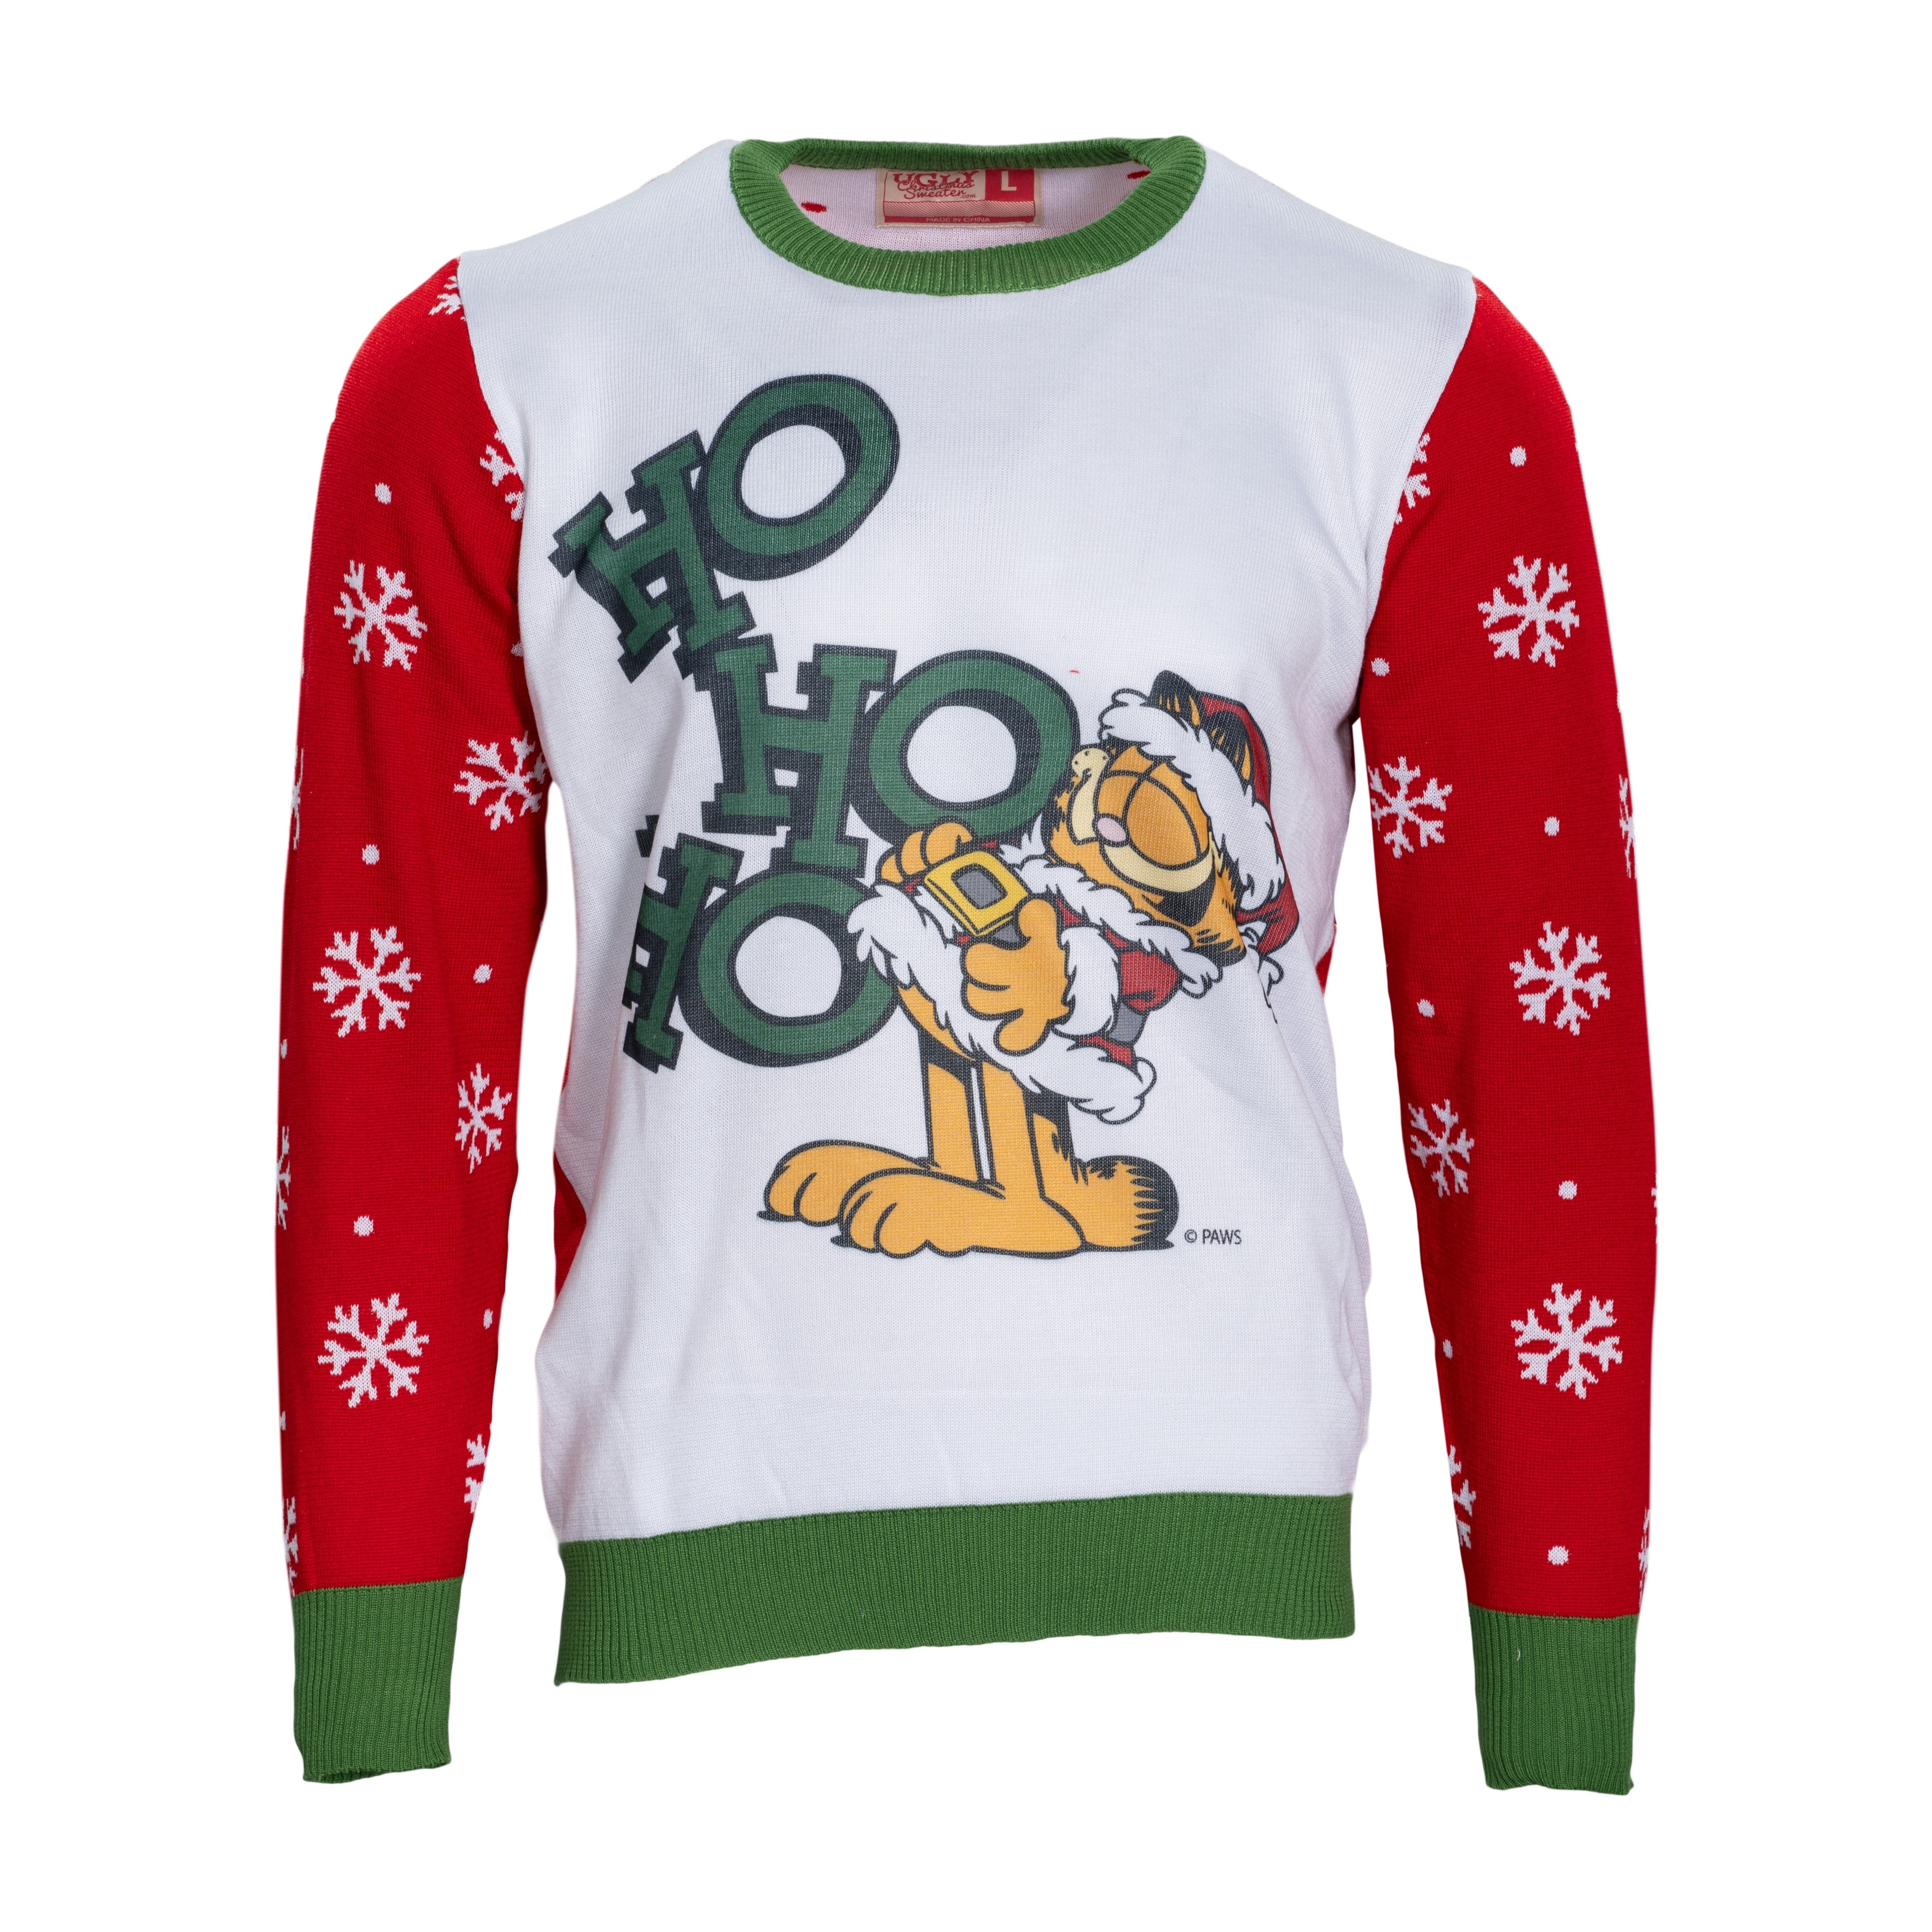 Garfield Santa "HO HO HO" Christmas Sweater